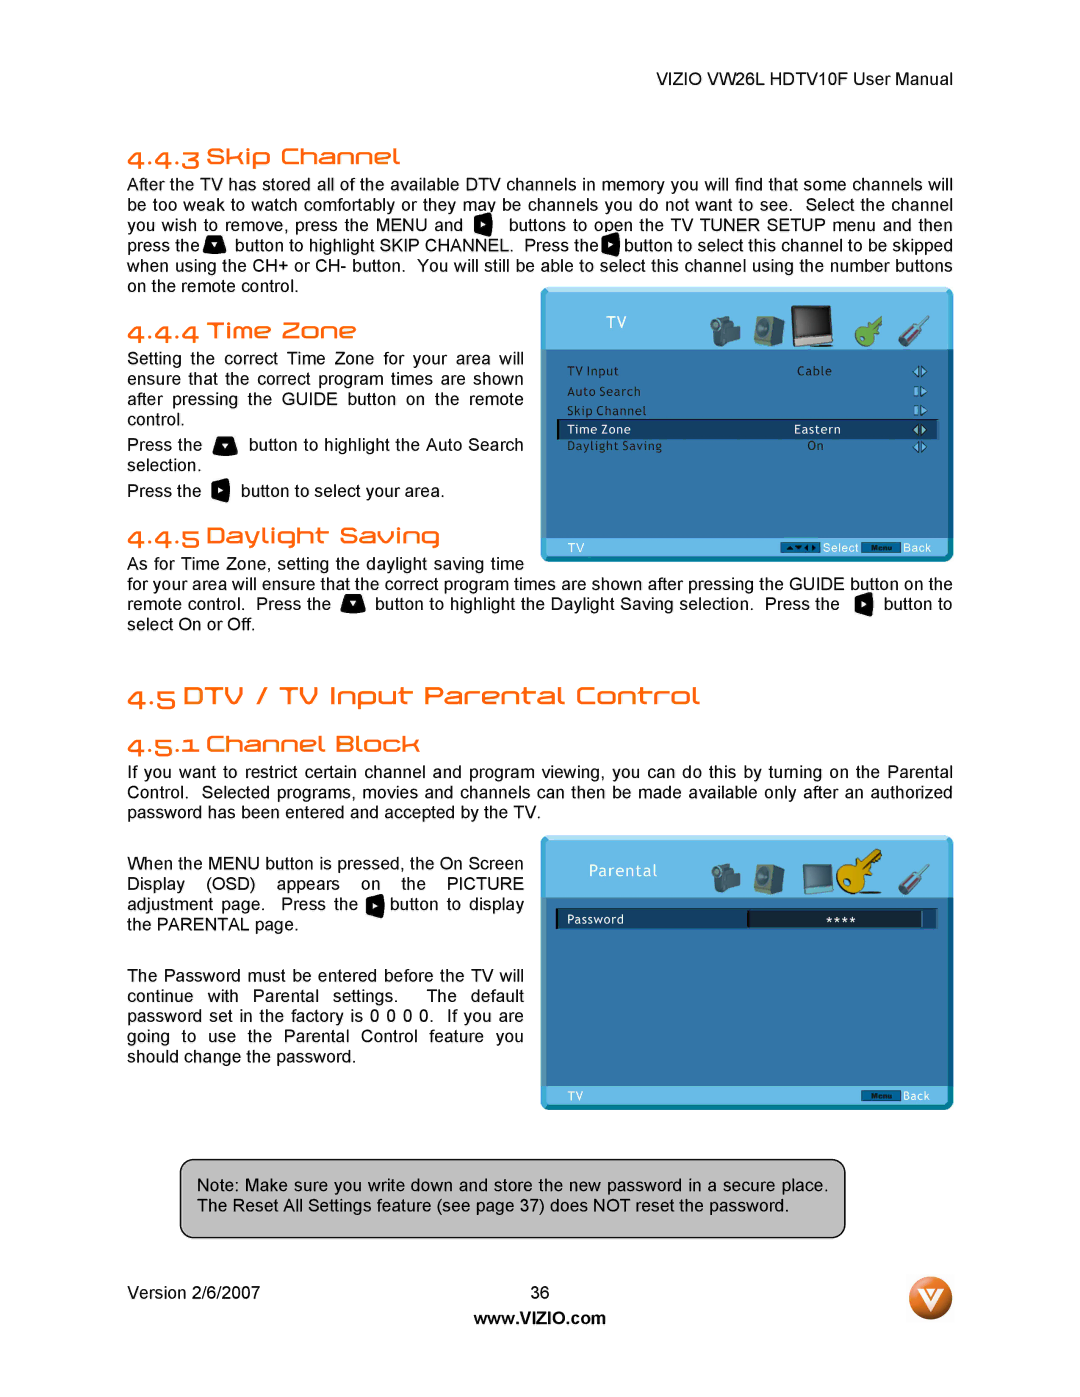 Vizio VW26L user manual DTV / TV Input Parental Control, Skip Channel, Time Zone, Daylight Saving, Channel Block 